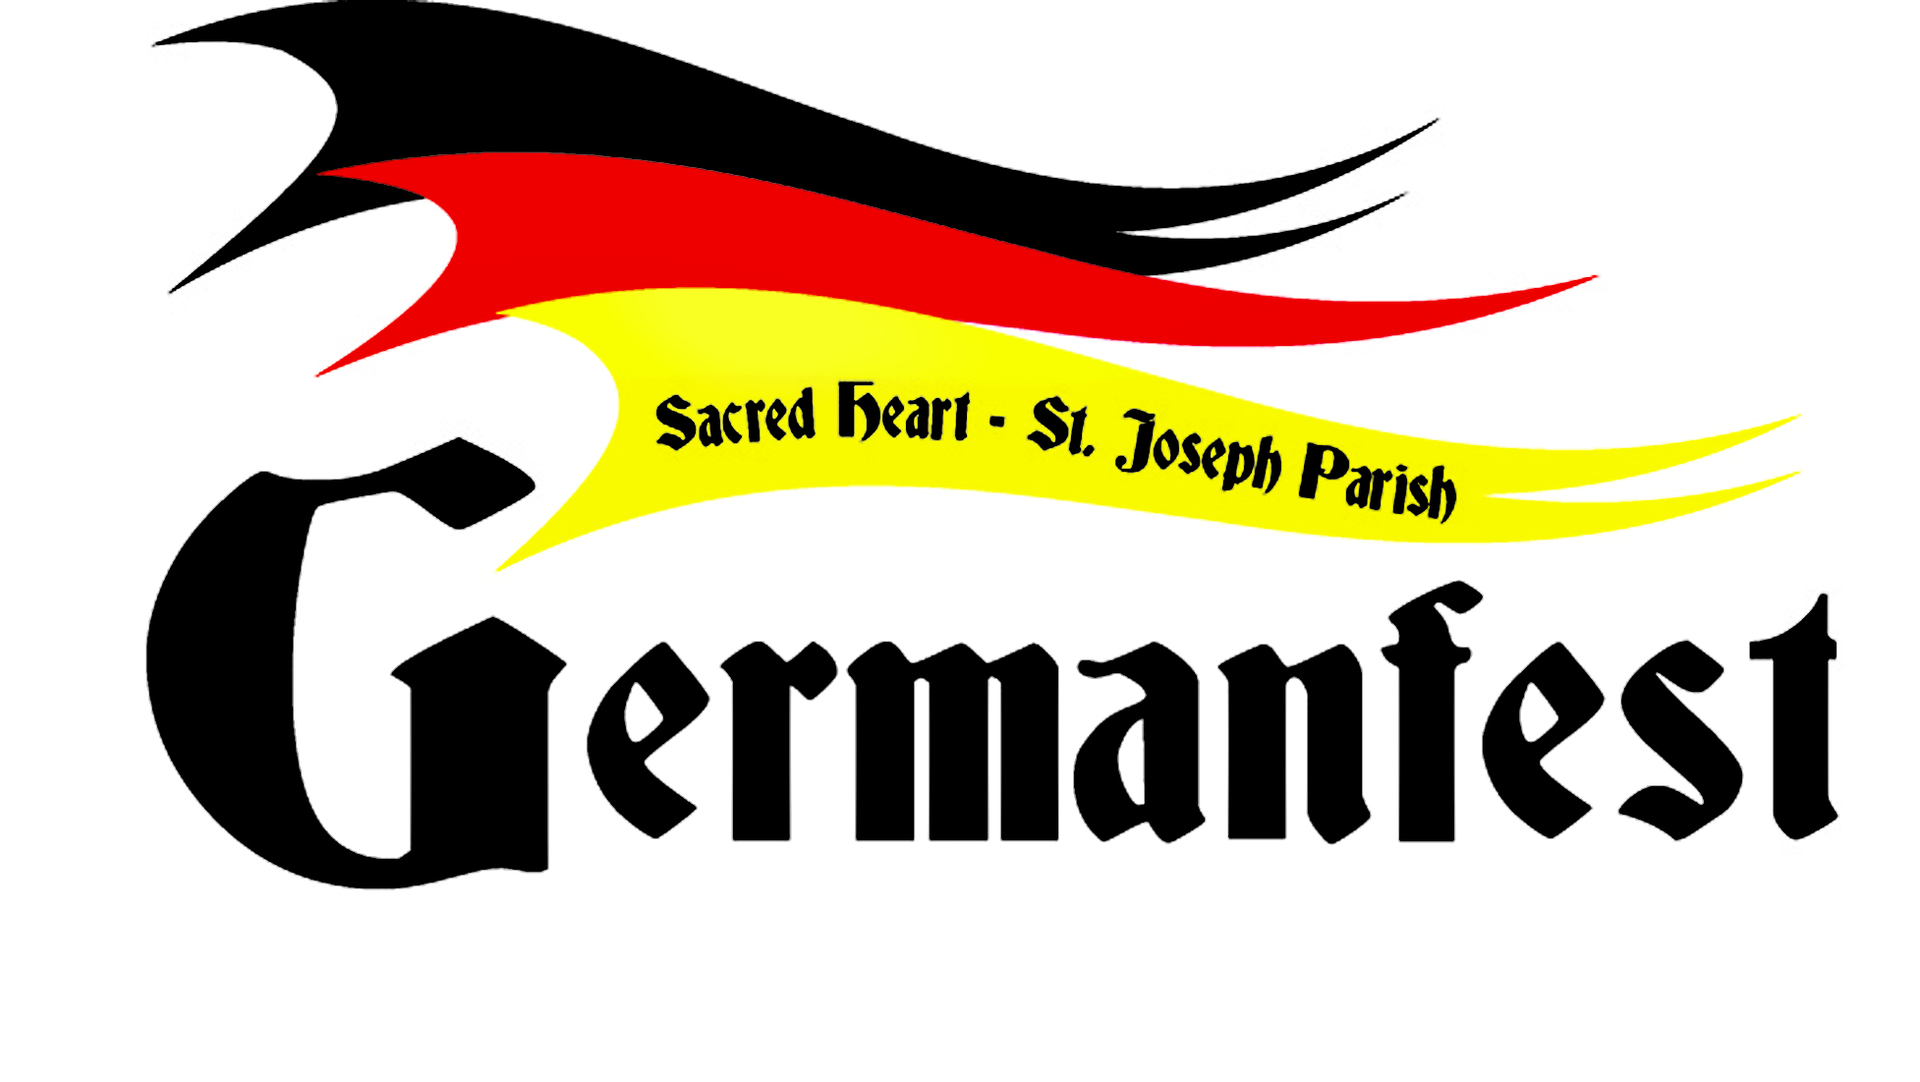 Germanfest logo page title